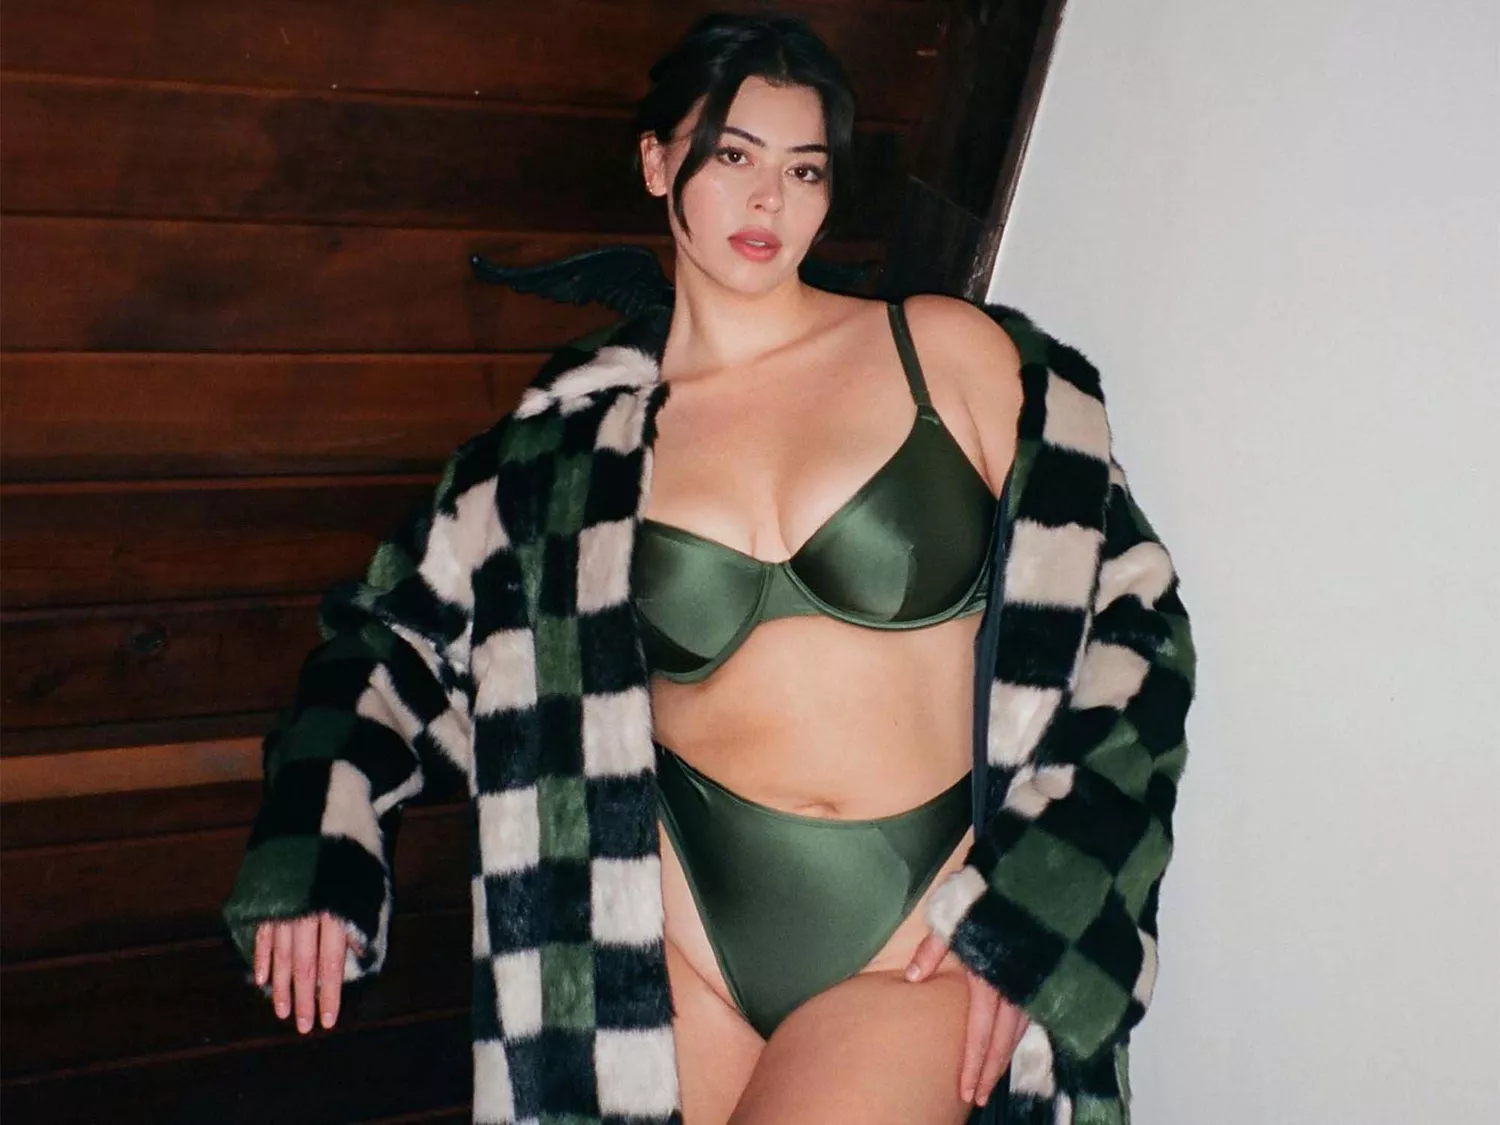 Lauren Chan wearing a green bra and fur coat